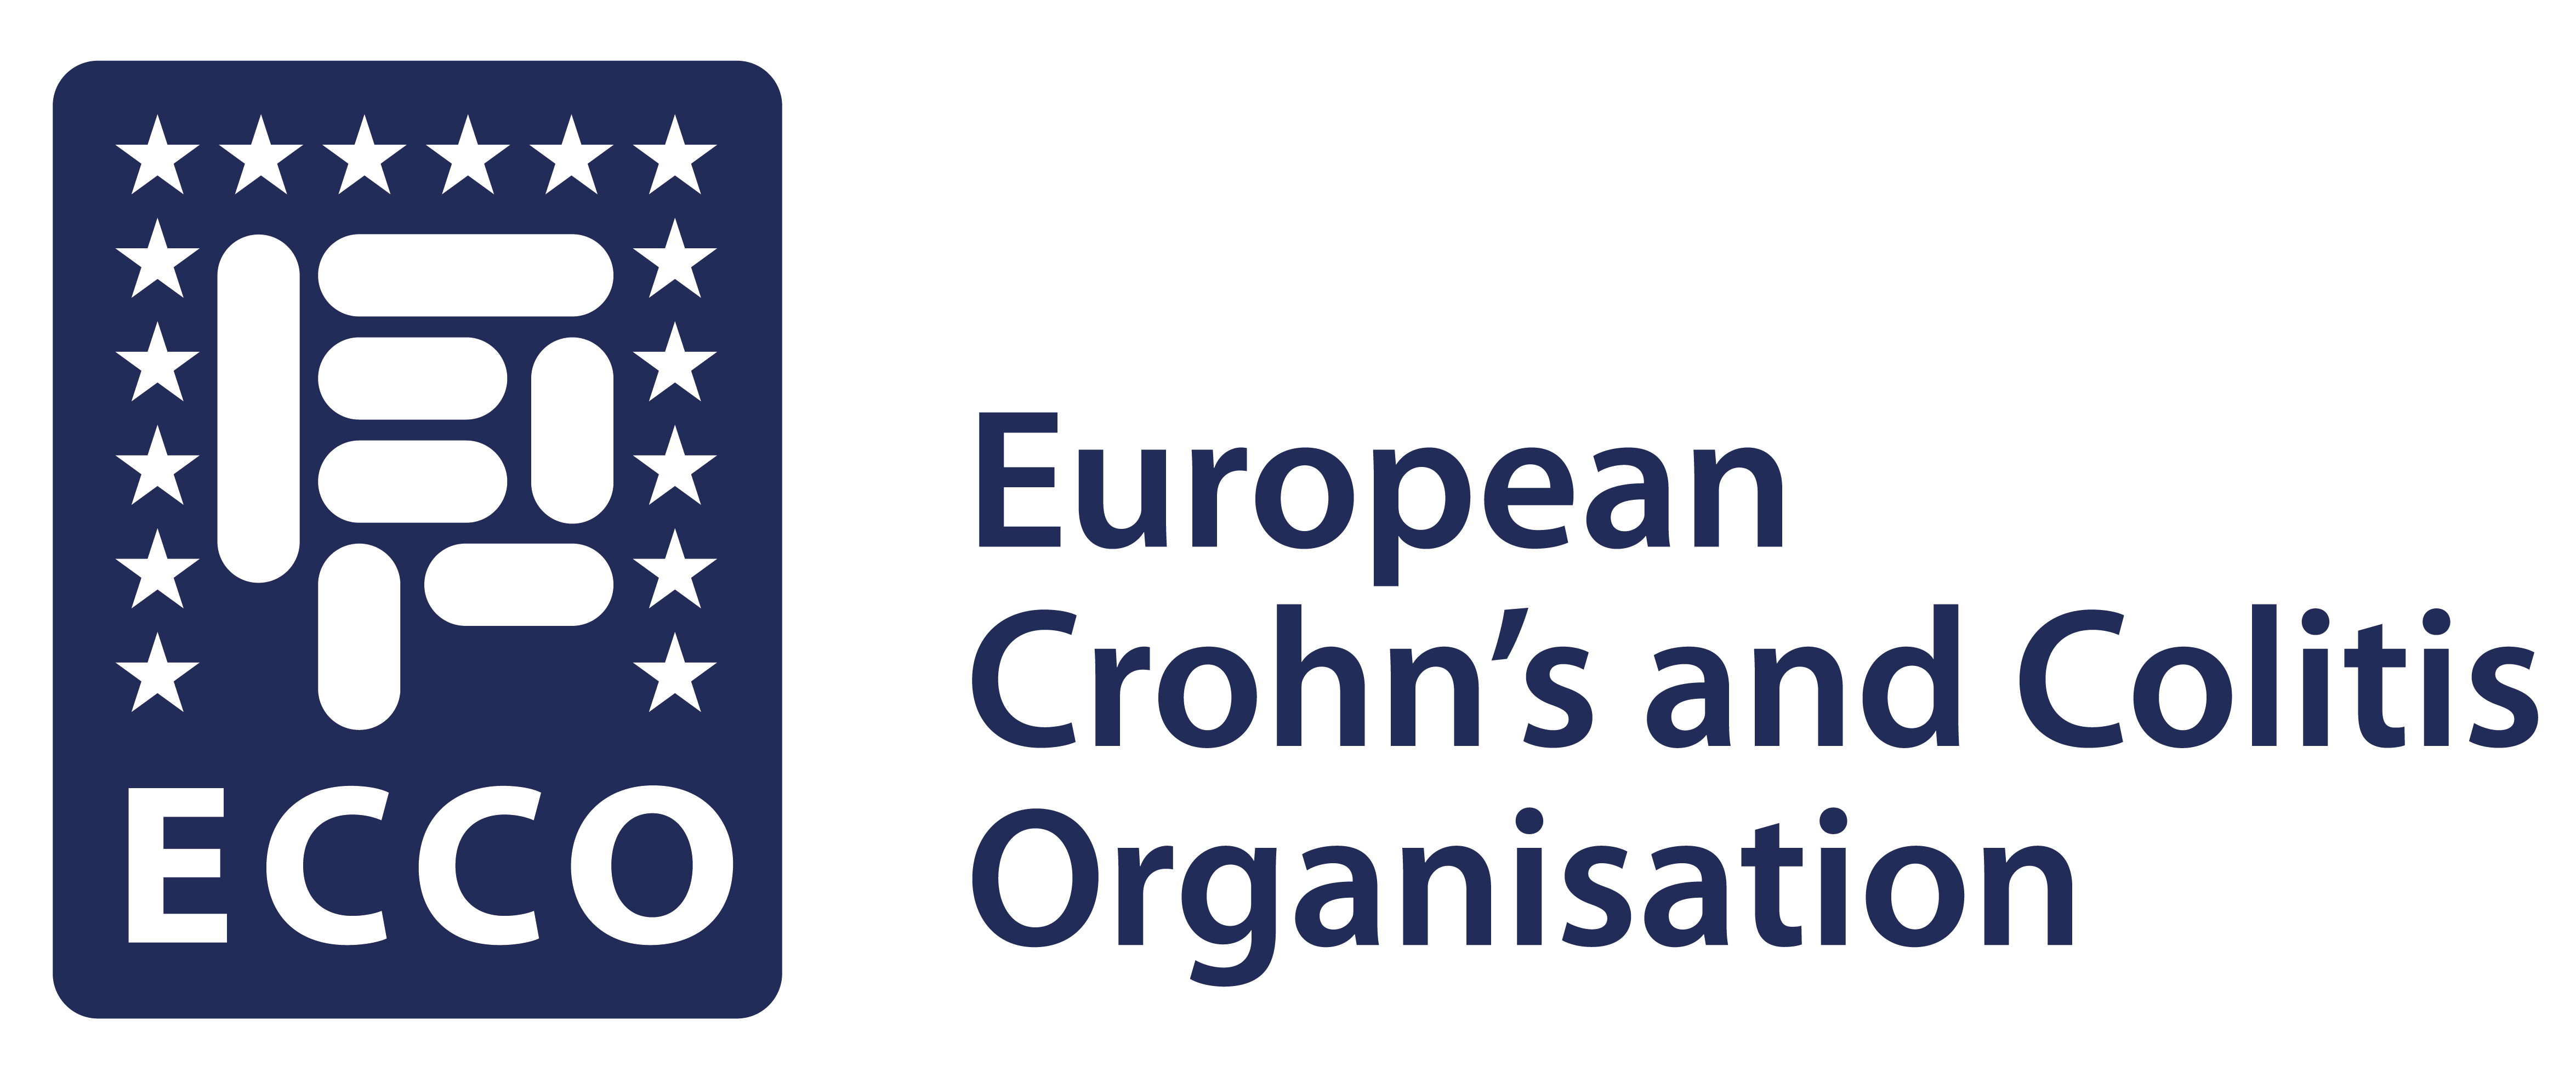  European Crohn’s and Colitis Organisation (ECCO IBD)